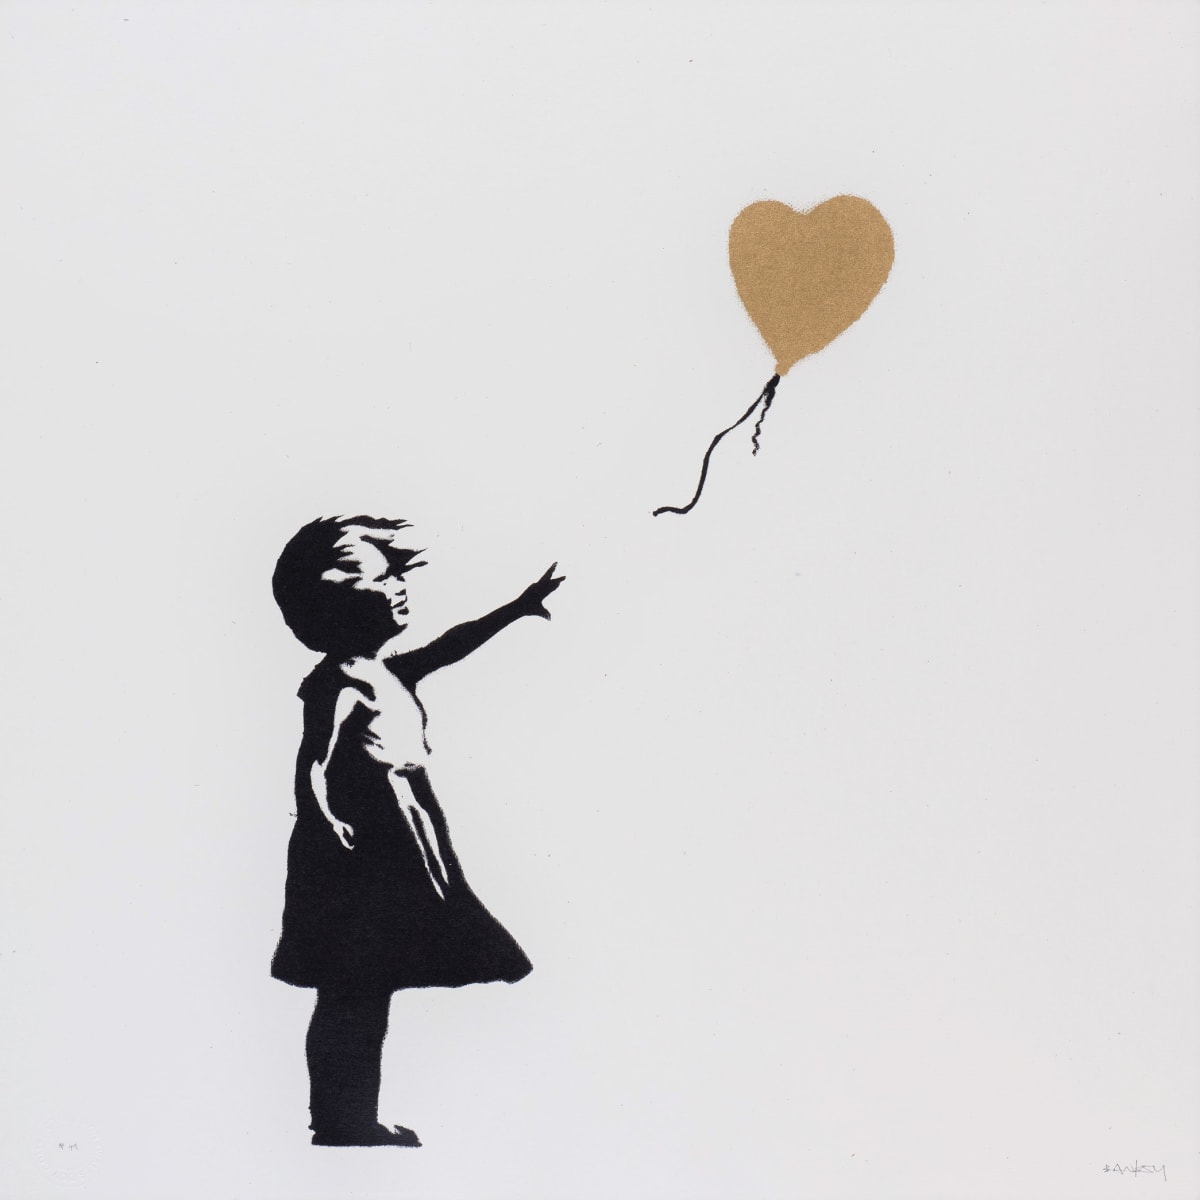 Banksy Art For Sale: Prints & Original Paintings | Andipa Editions